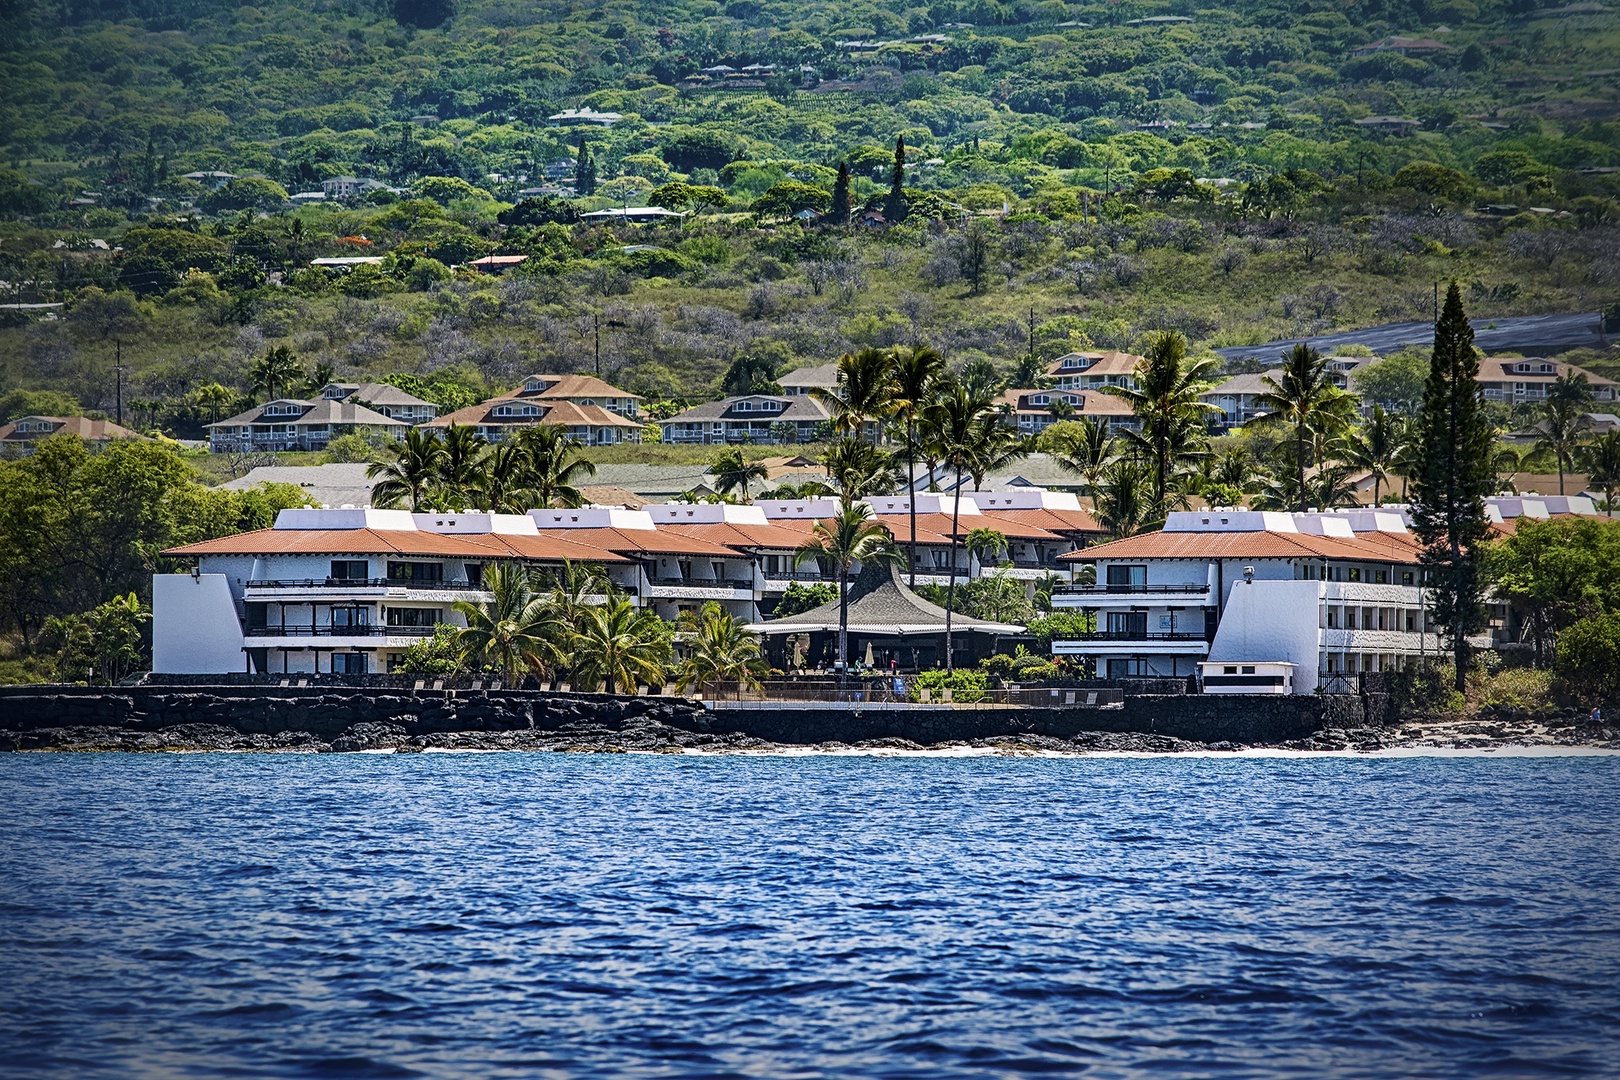 Kailua Kona Vacation Rentals, Casa De Emdeko 336 - Views of Casa De Emdeko from the water